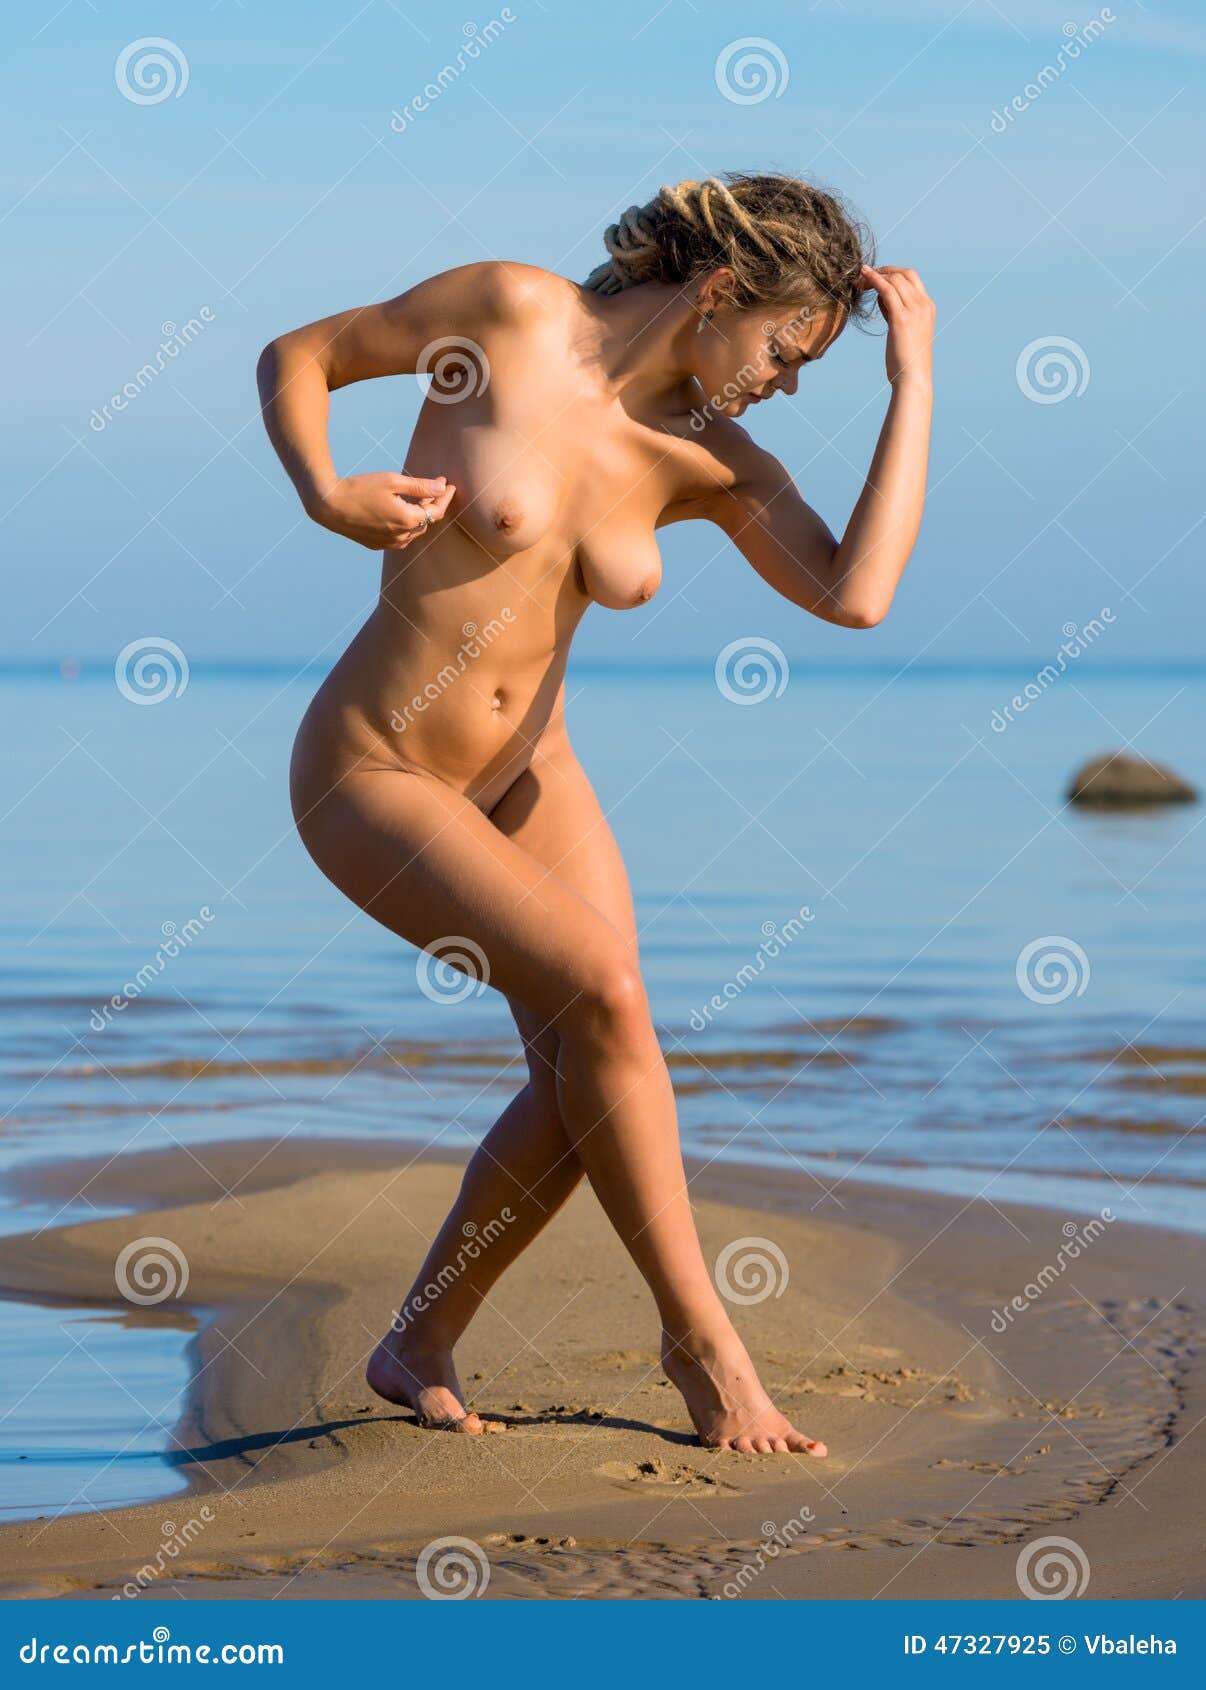 cody gilleland add naked women posing photo